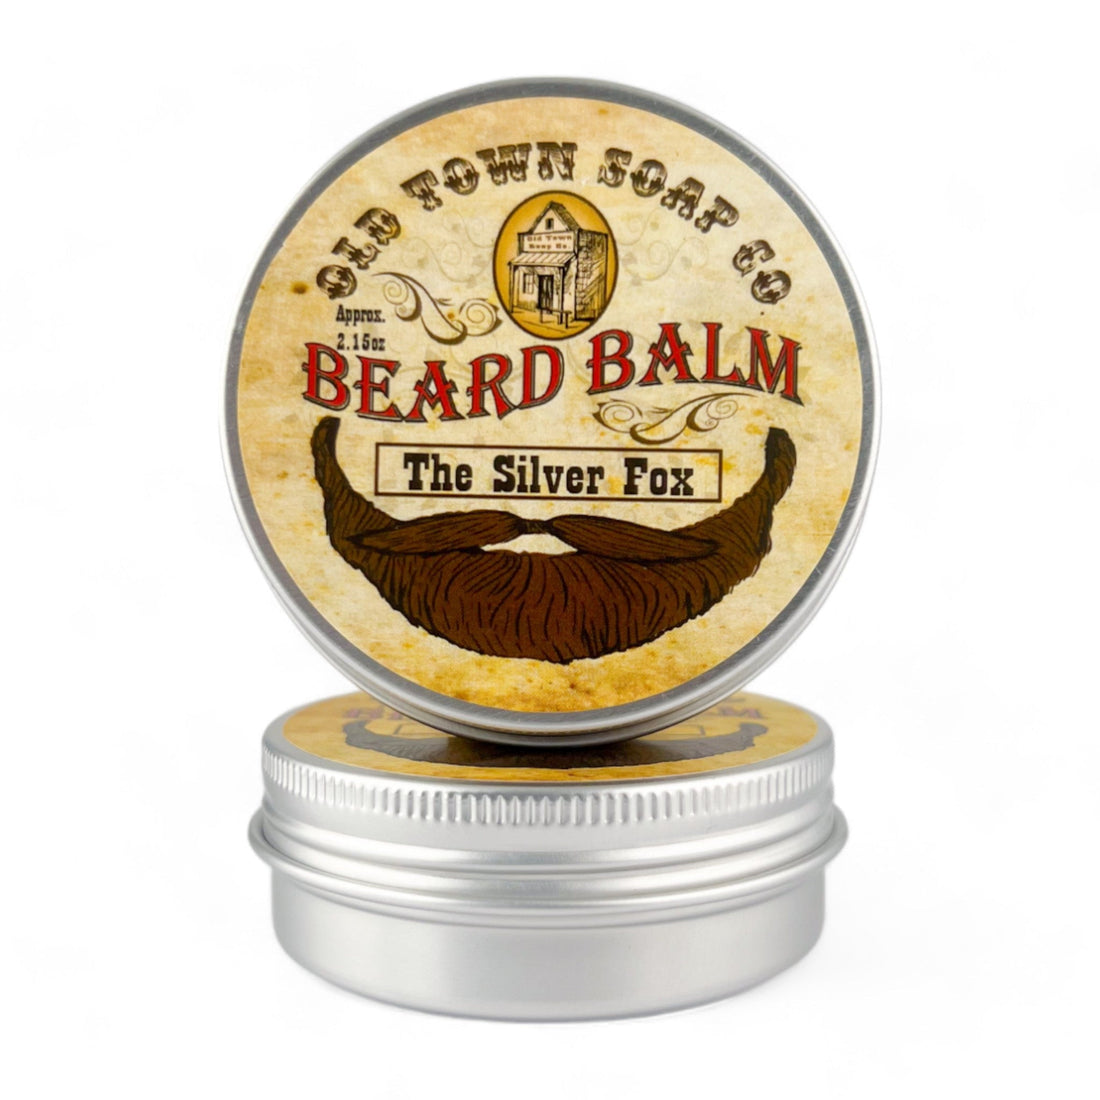 The Silver Fox Beard Balm - Old Town Soap Co.